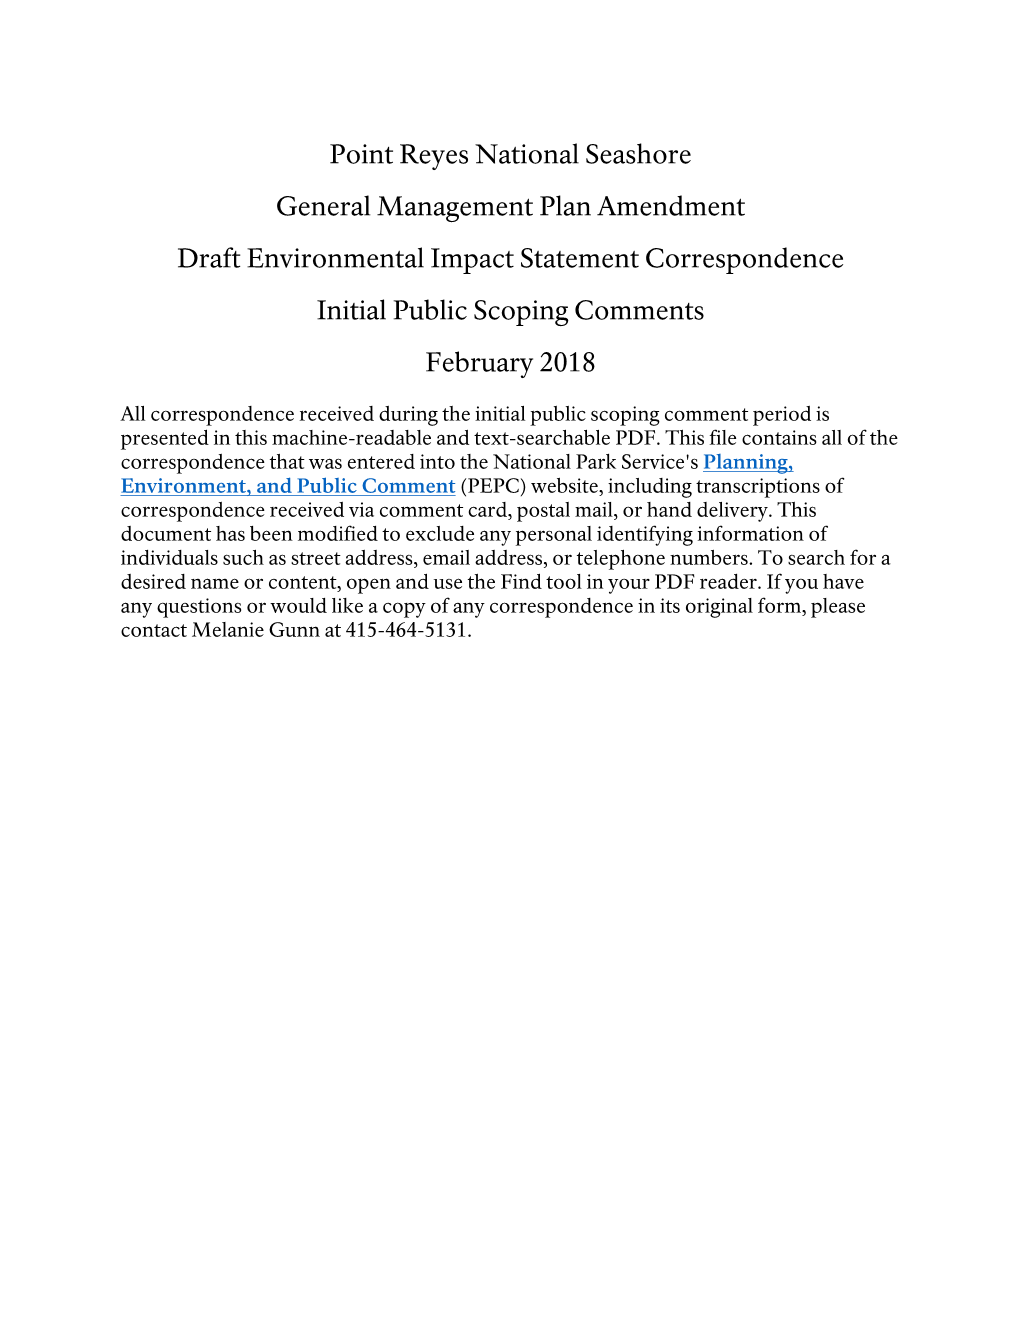 General Management Plan Amendment: Draft Environmental